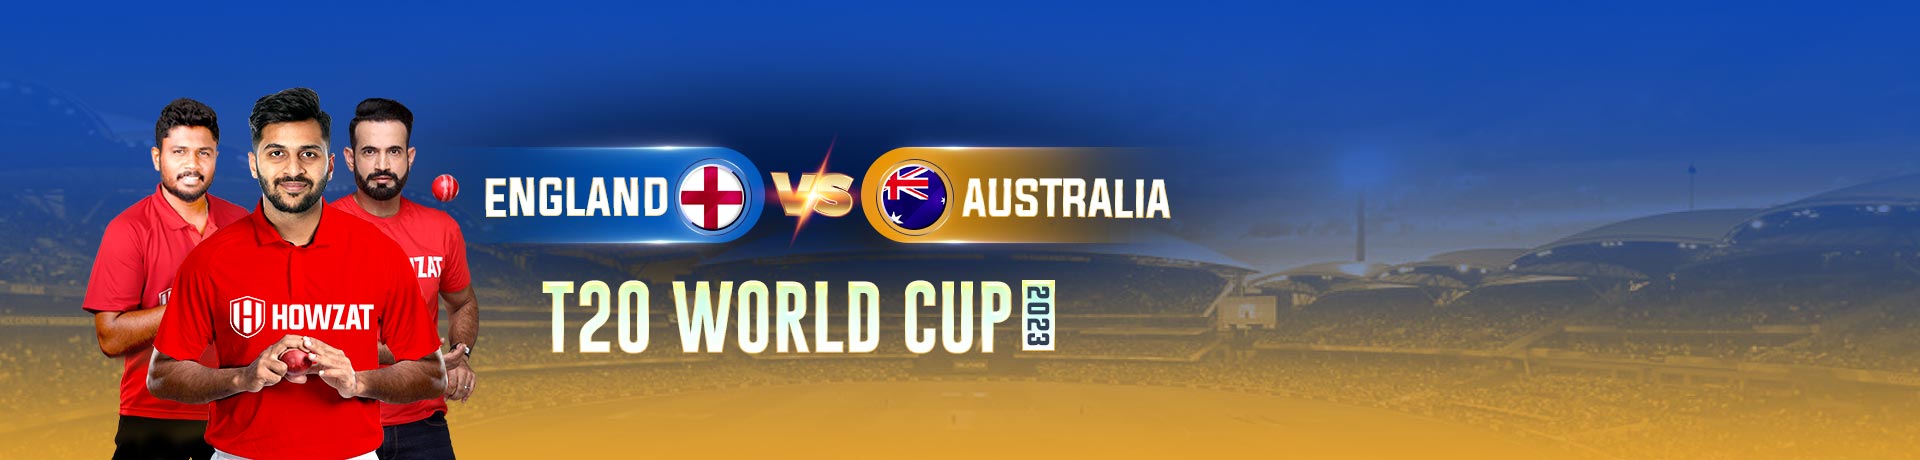 England vs Australia T20 World Cup